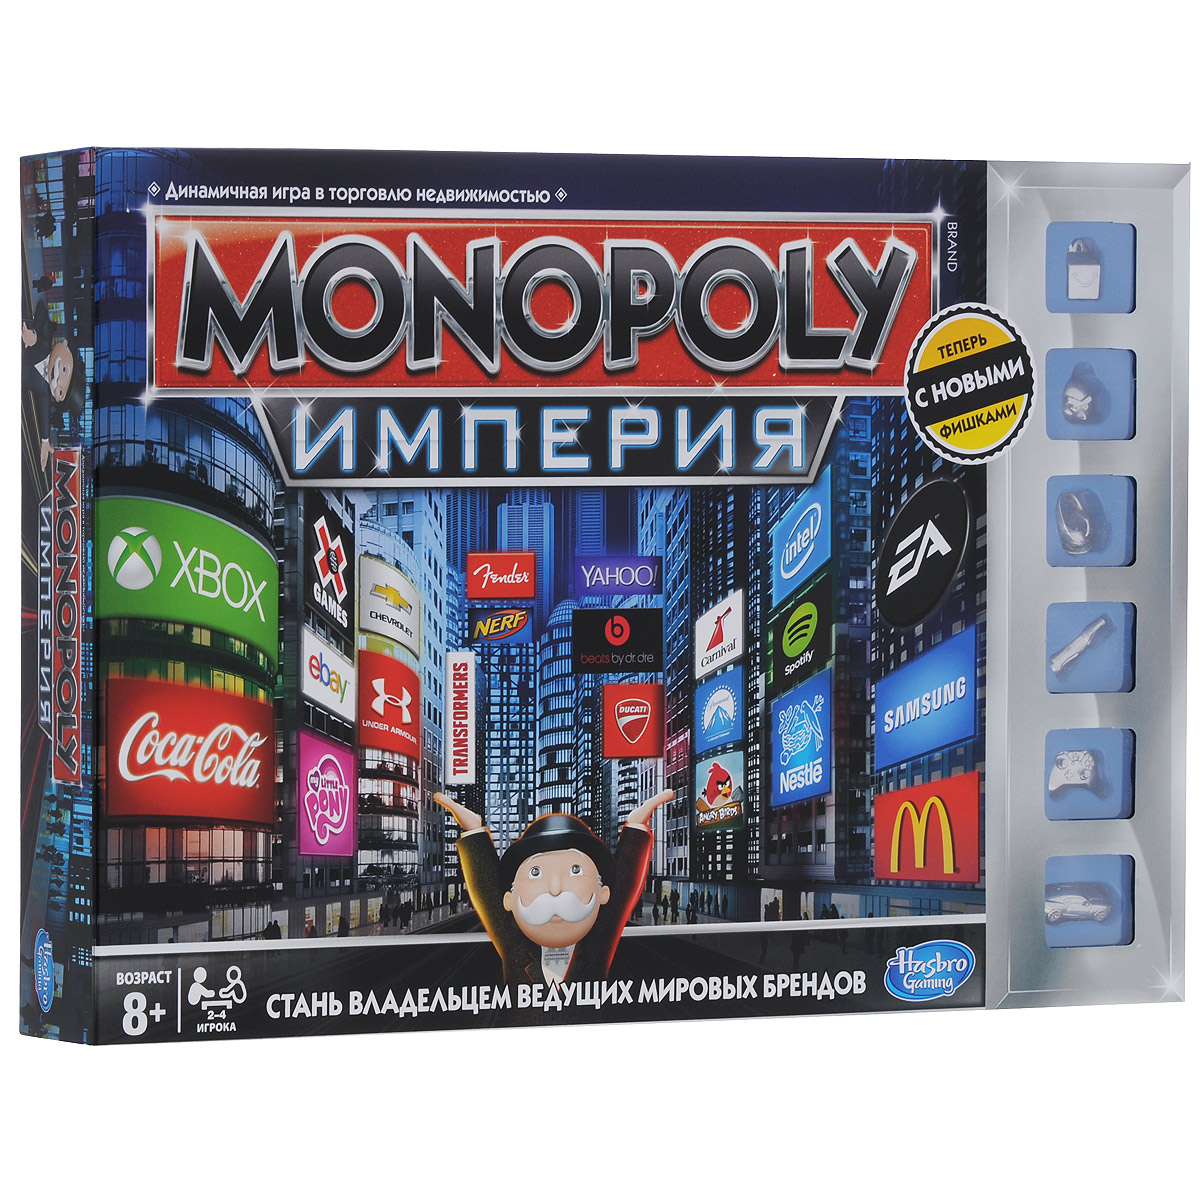 Monopoly играть. Монополия Империя Хасбро. Монополия Hasbro games, реванш. Игра Монополия Империя. Монополия оригинал Hasbro.